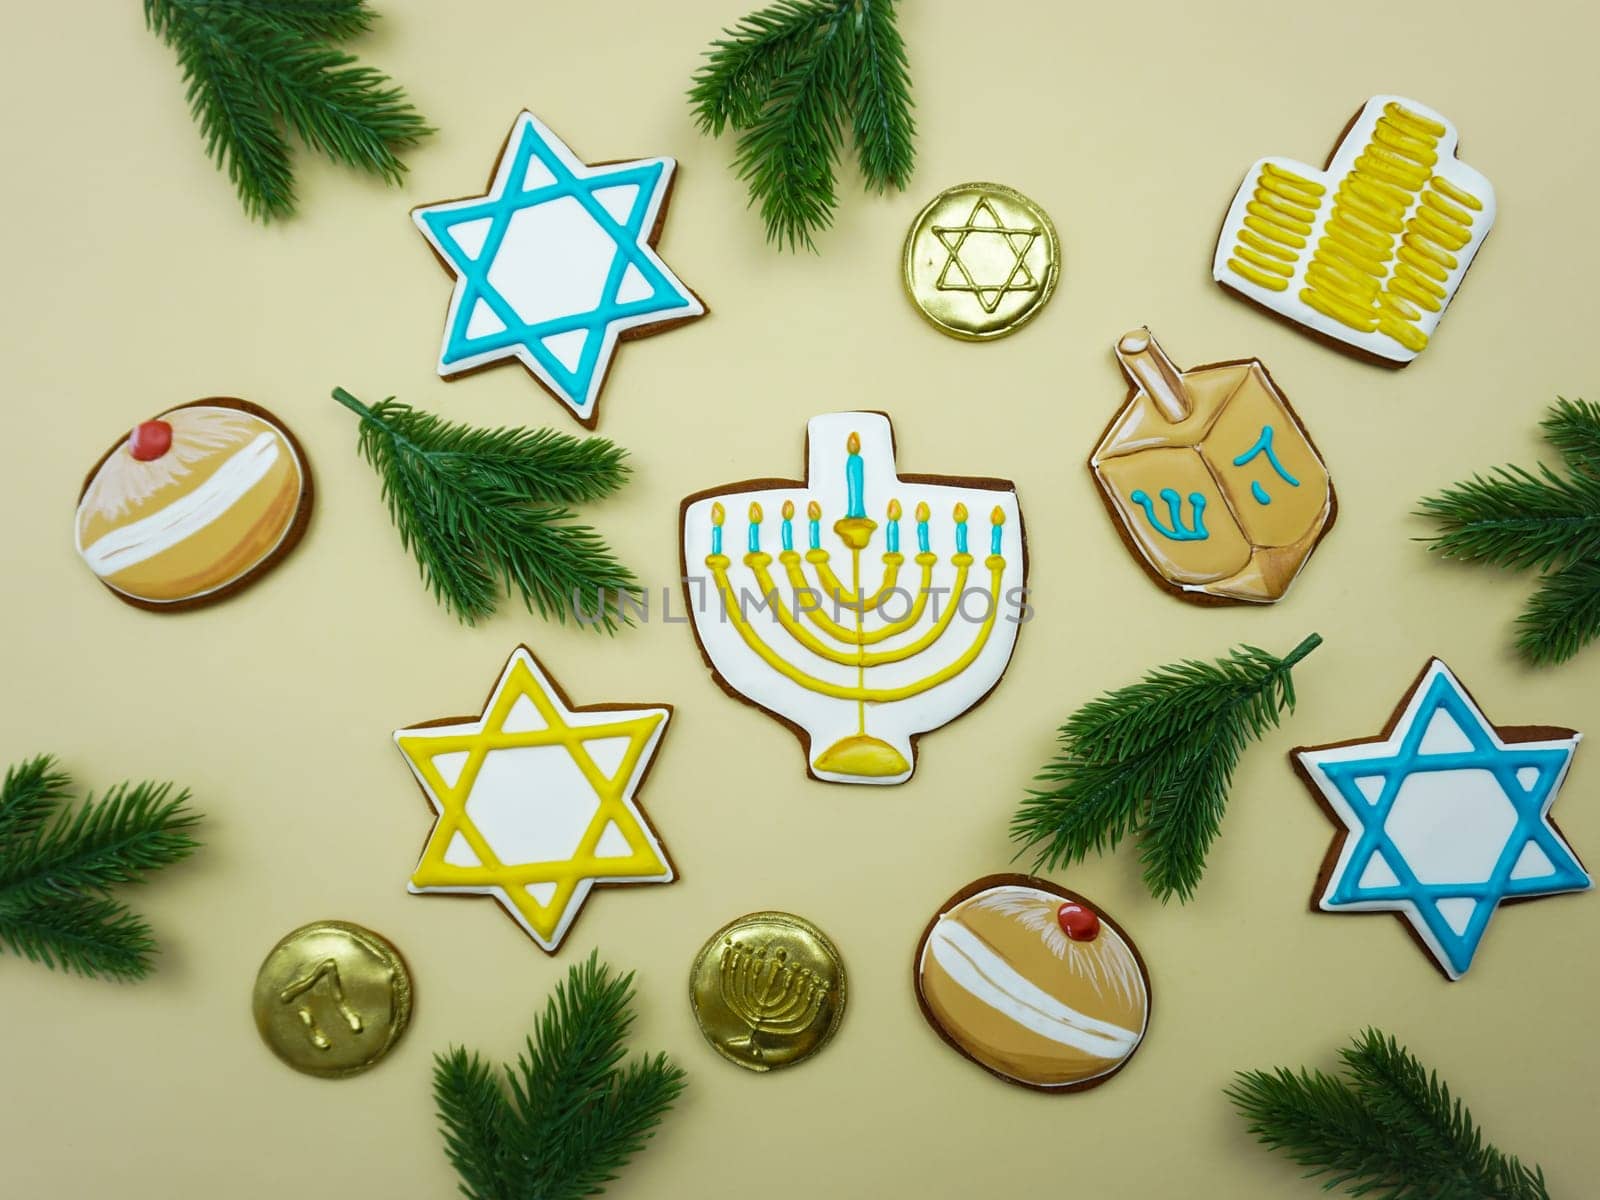 Celebrating Hanukkah. The concept of the Hanukkah holiday. High quality photo